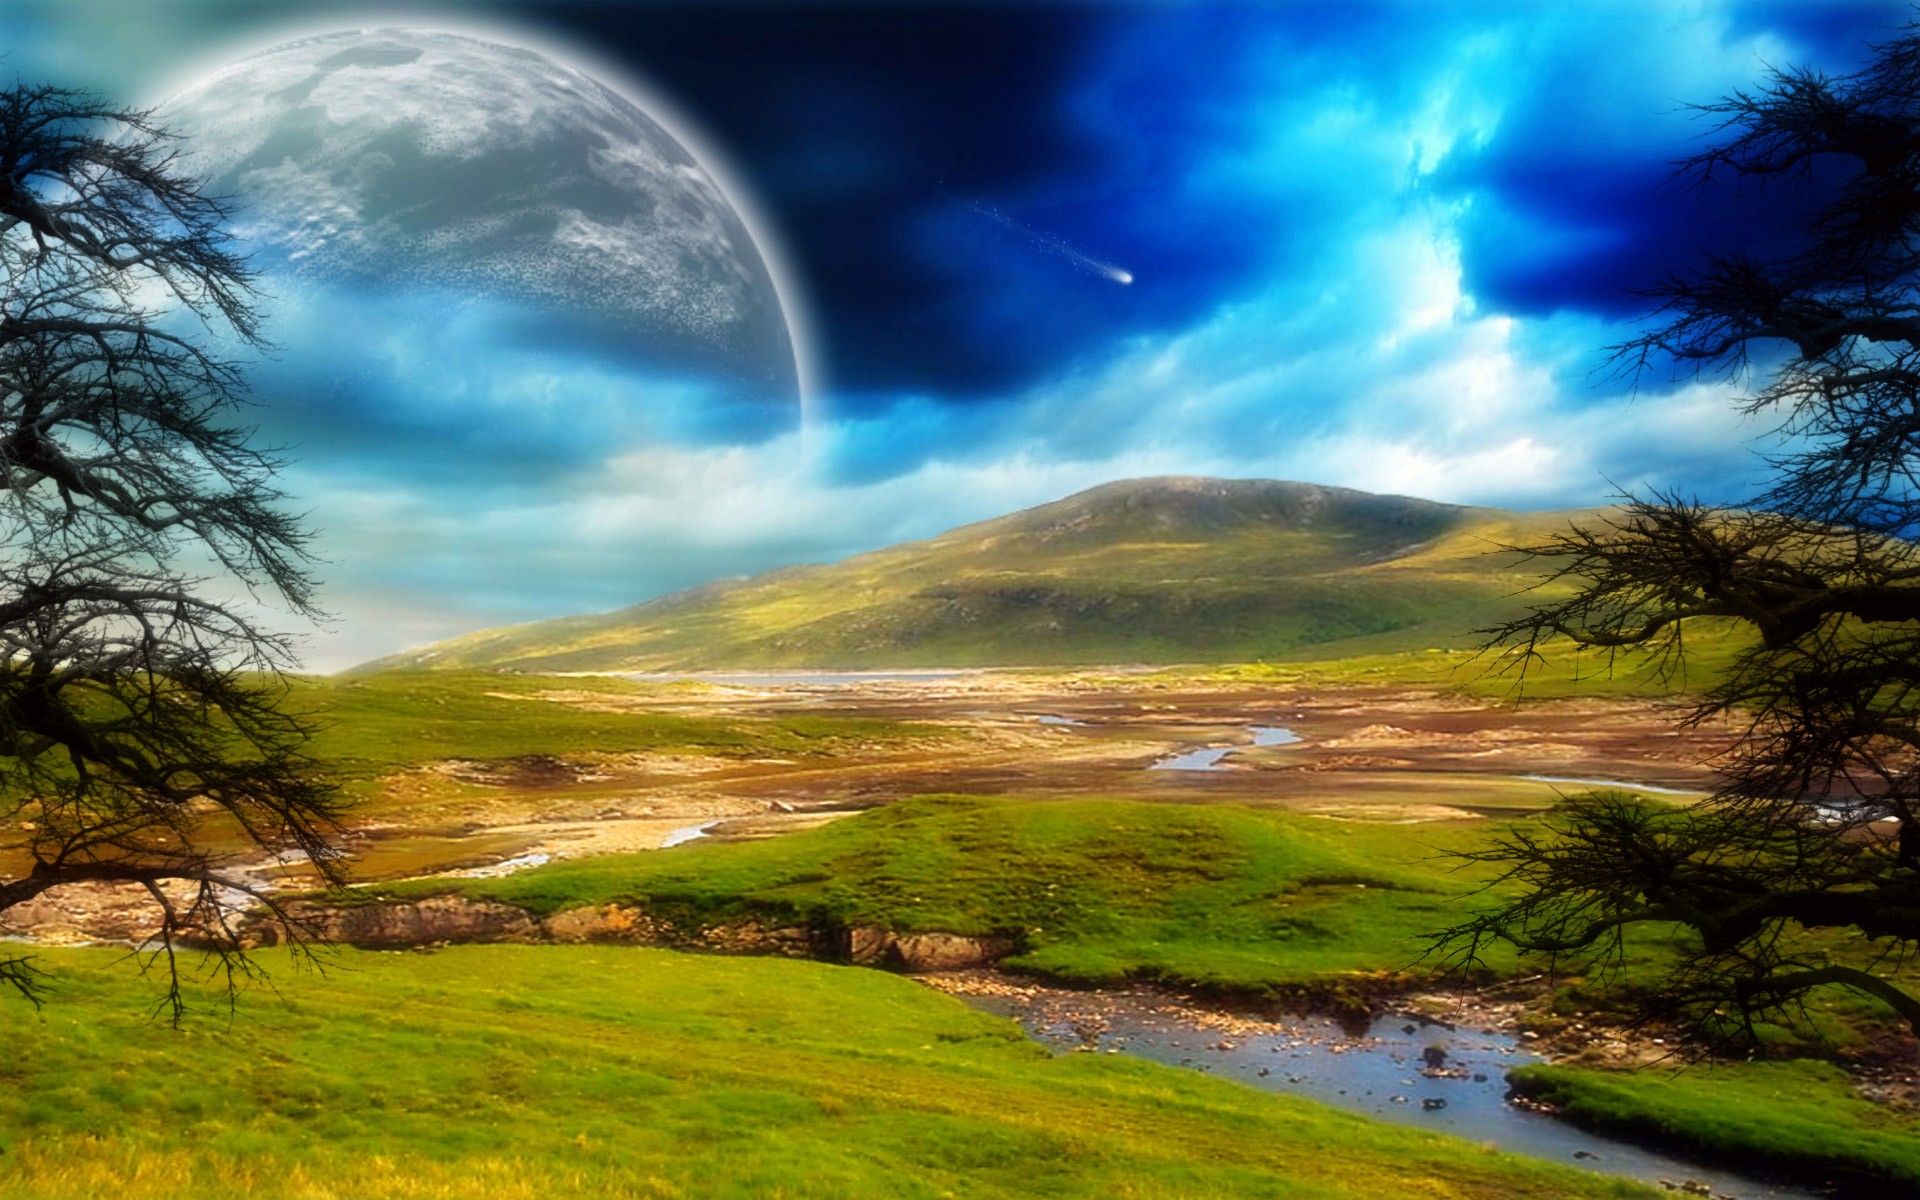 landscapes, science fiction - desktop wallpaper